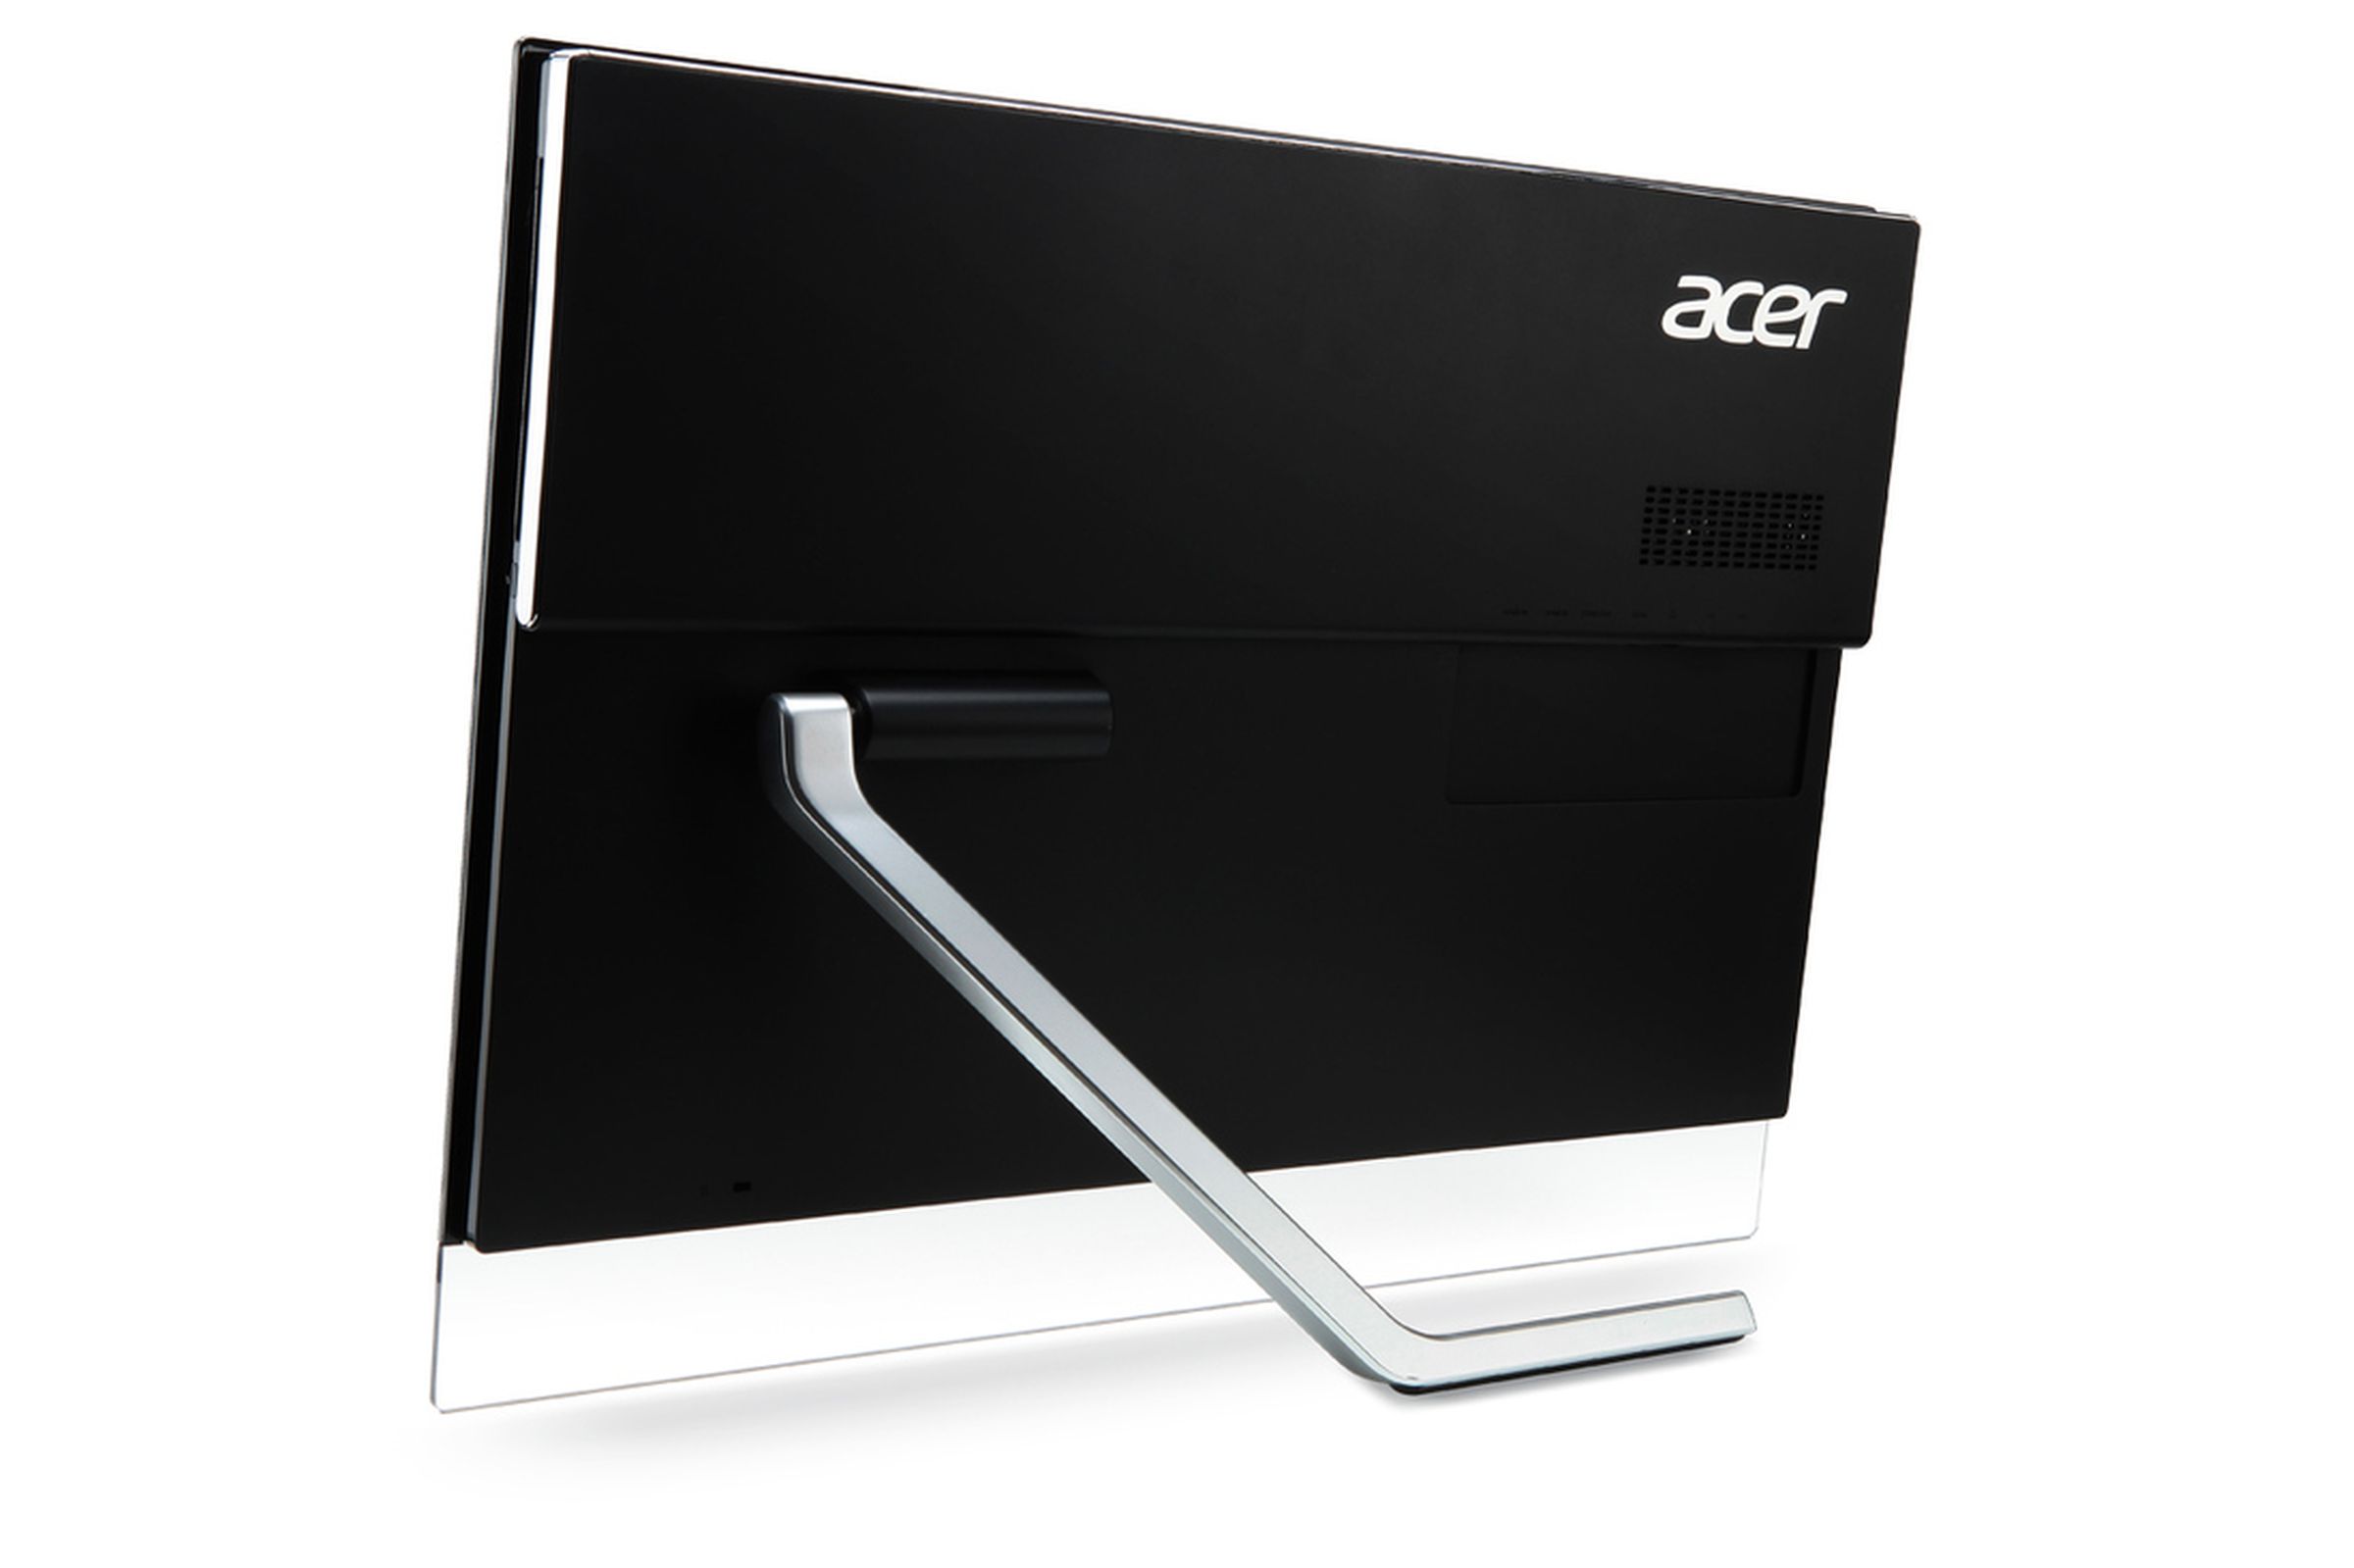 Acer Aspire 7600U Press Images